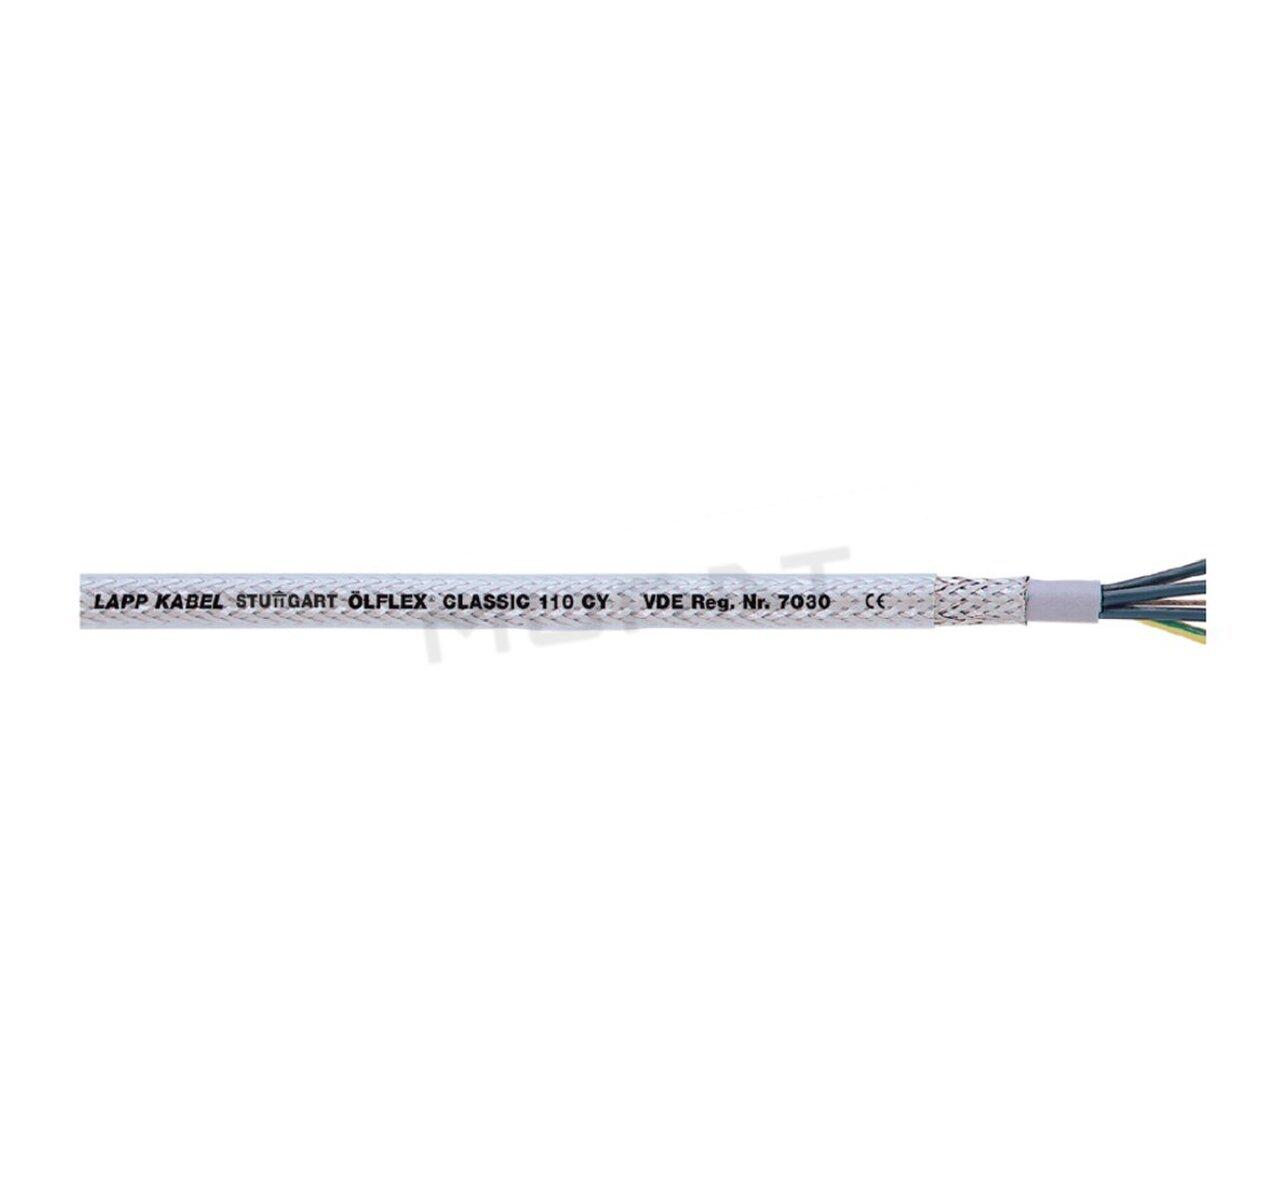 Kábel OLFLEX CLASSIC 110 CY 5Gx4 mm2